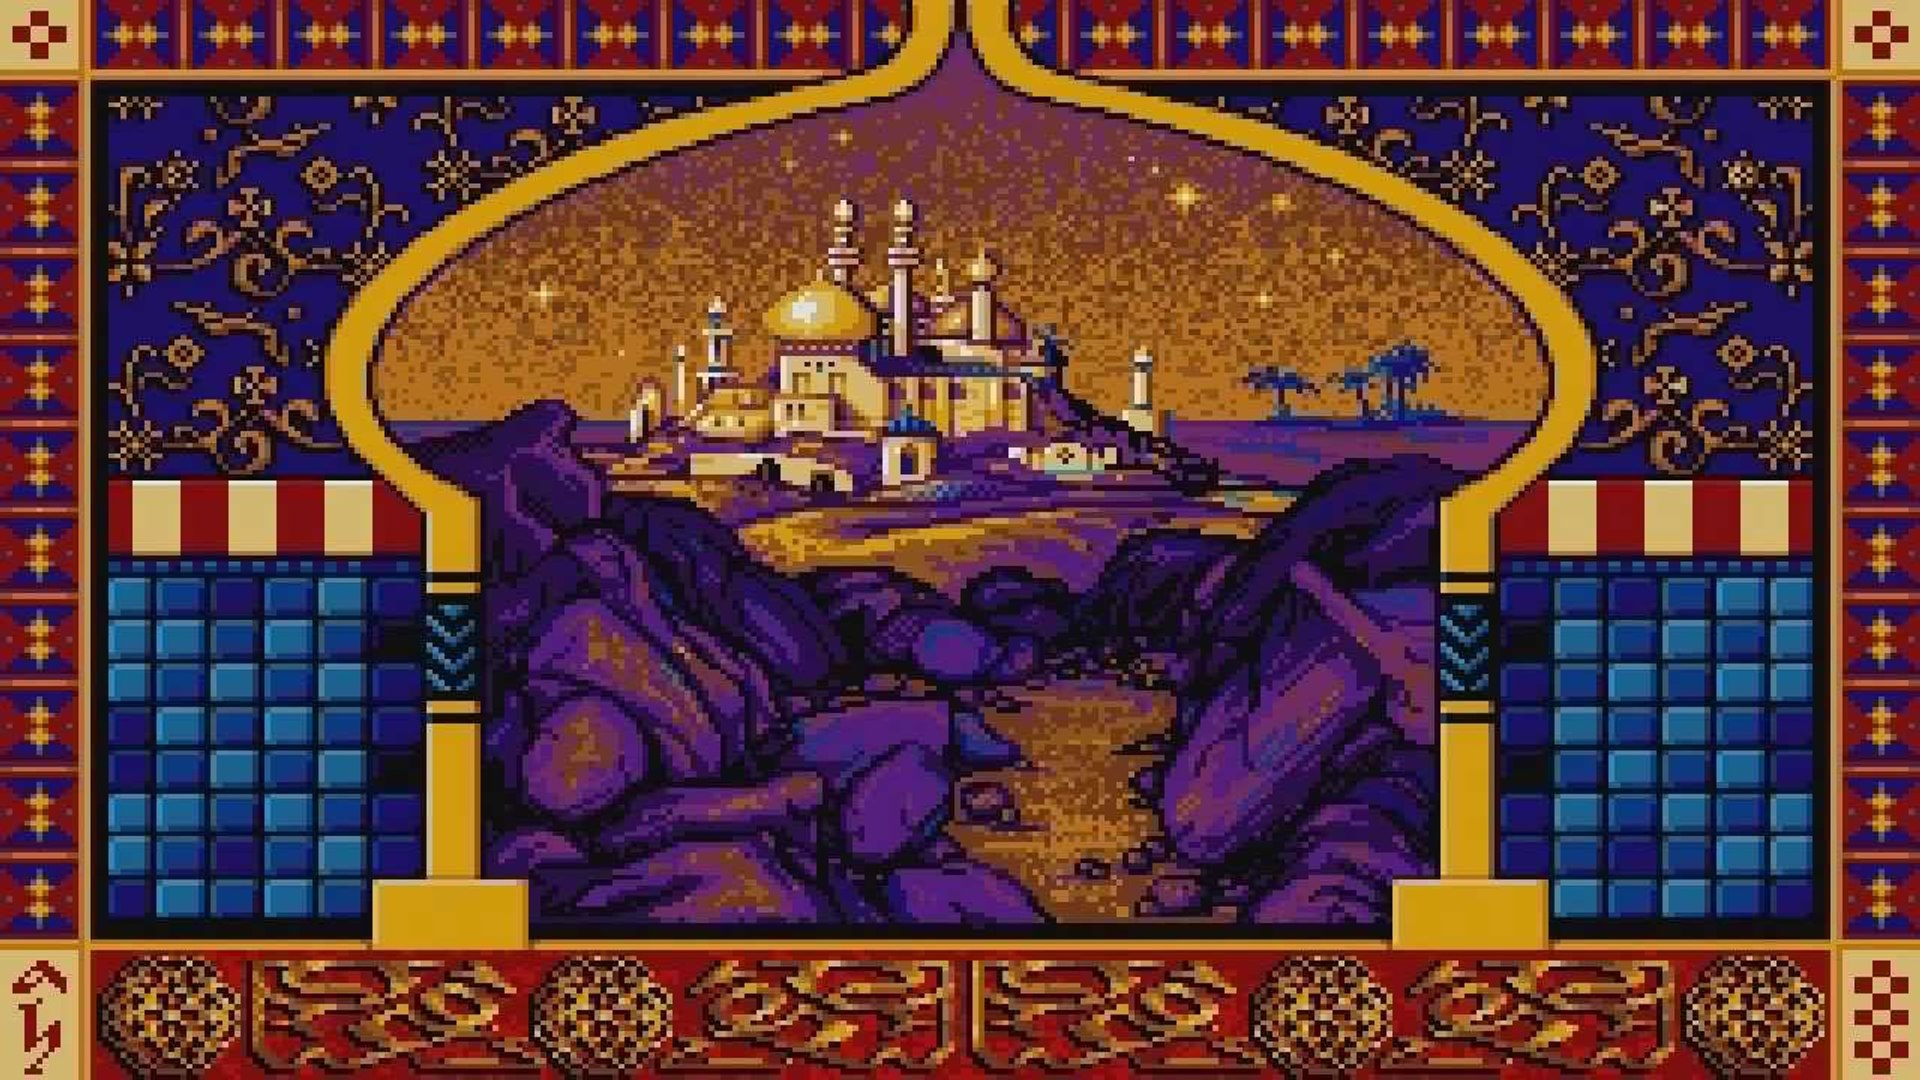 Prince of Persia (Brøderbund Software)